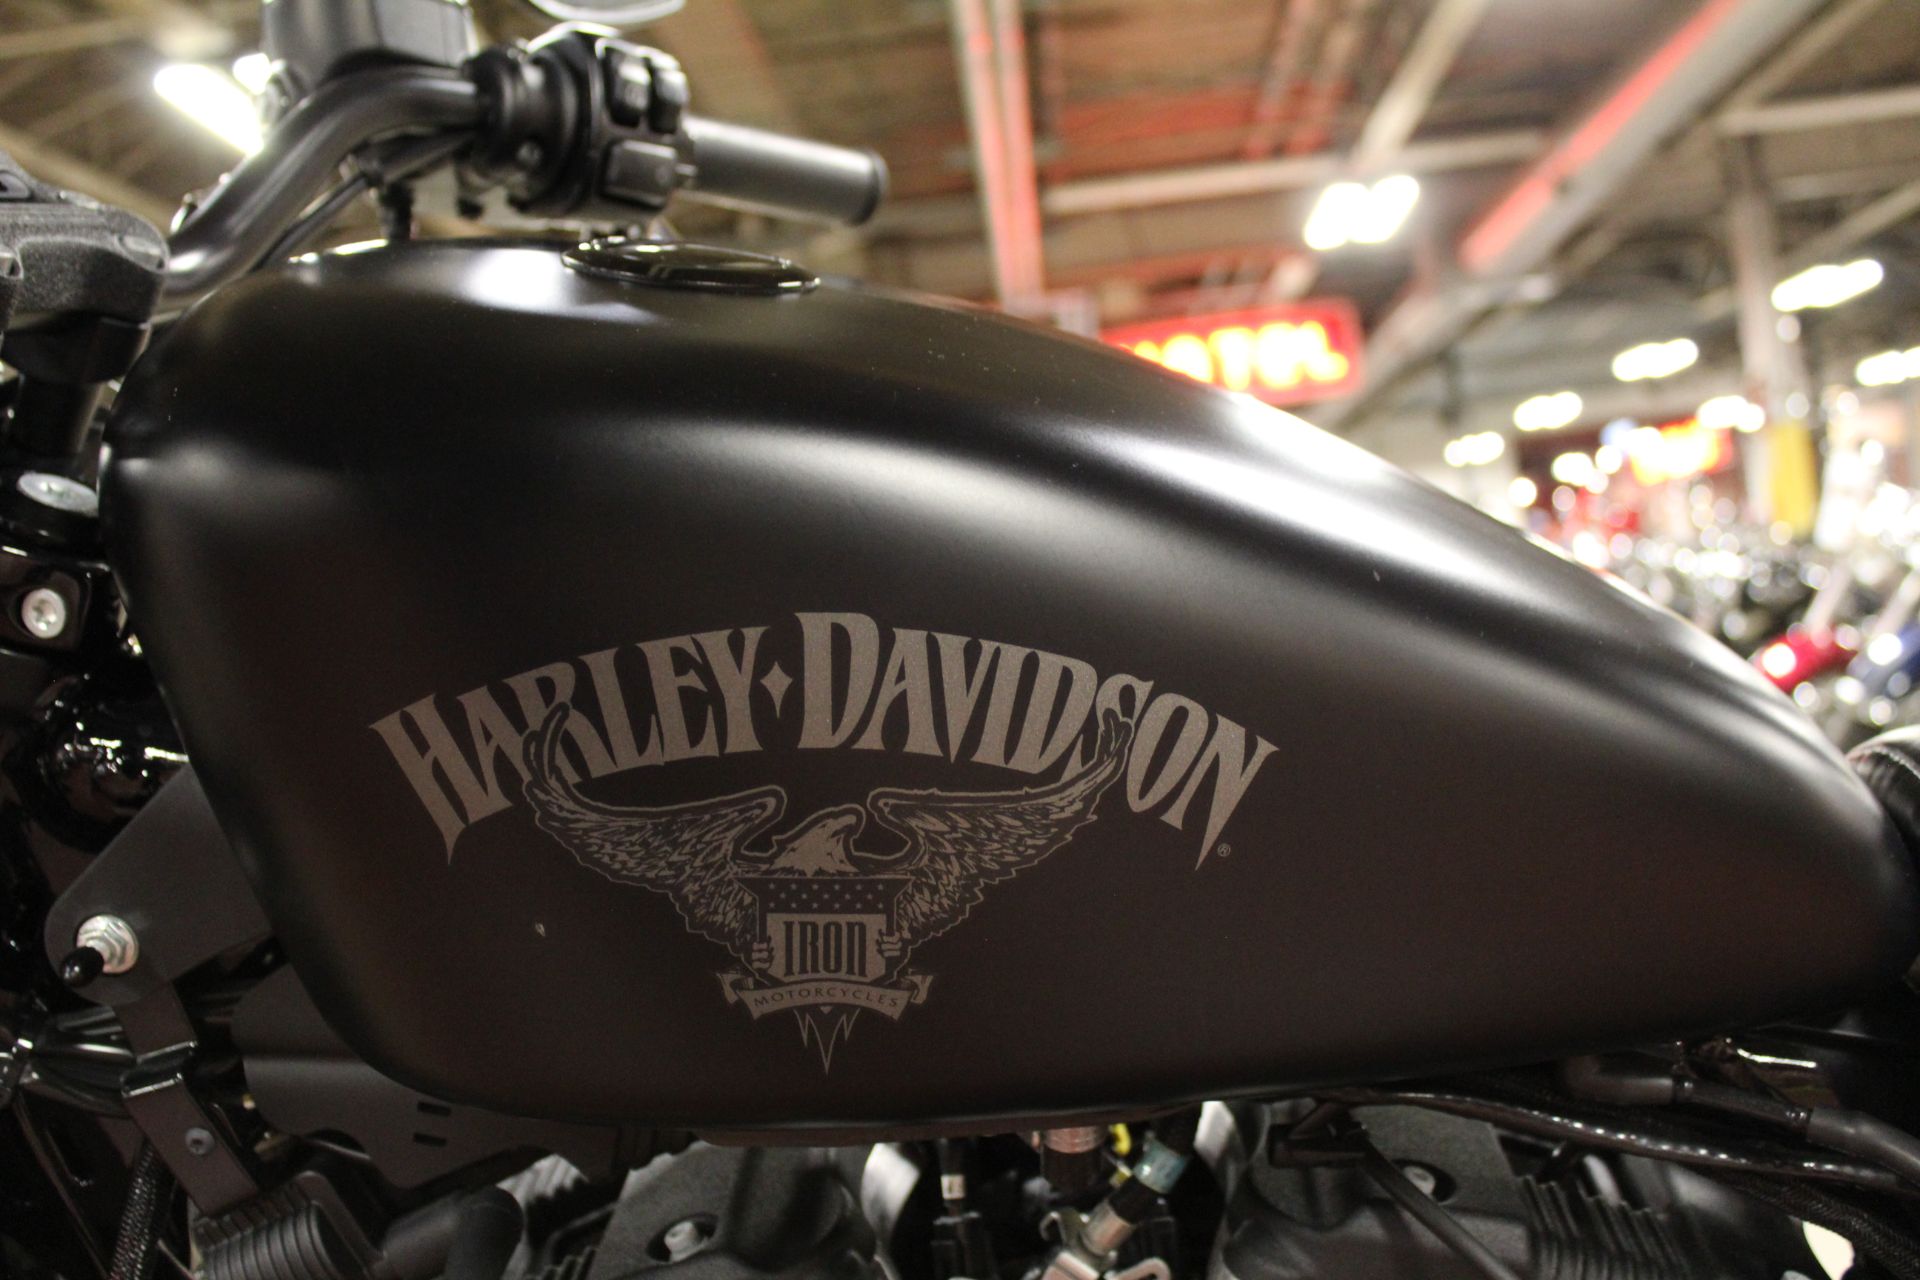 2016 Harley-Davidson Iron 883™ in New London, Connecticut - Photo 11